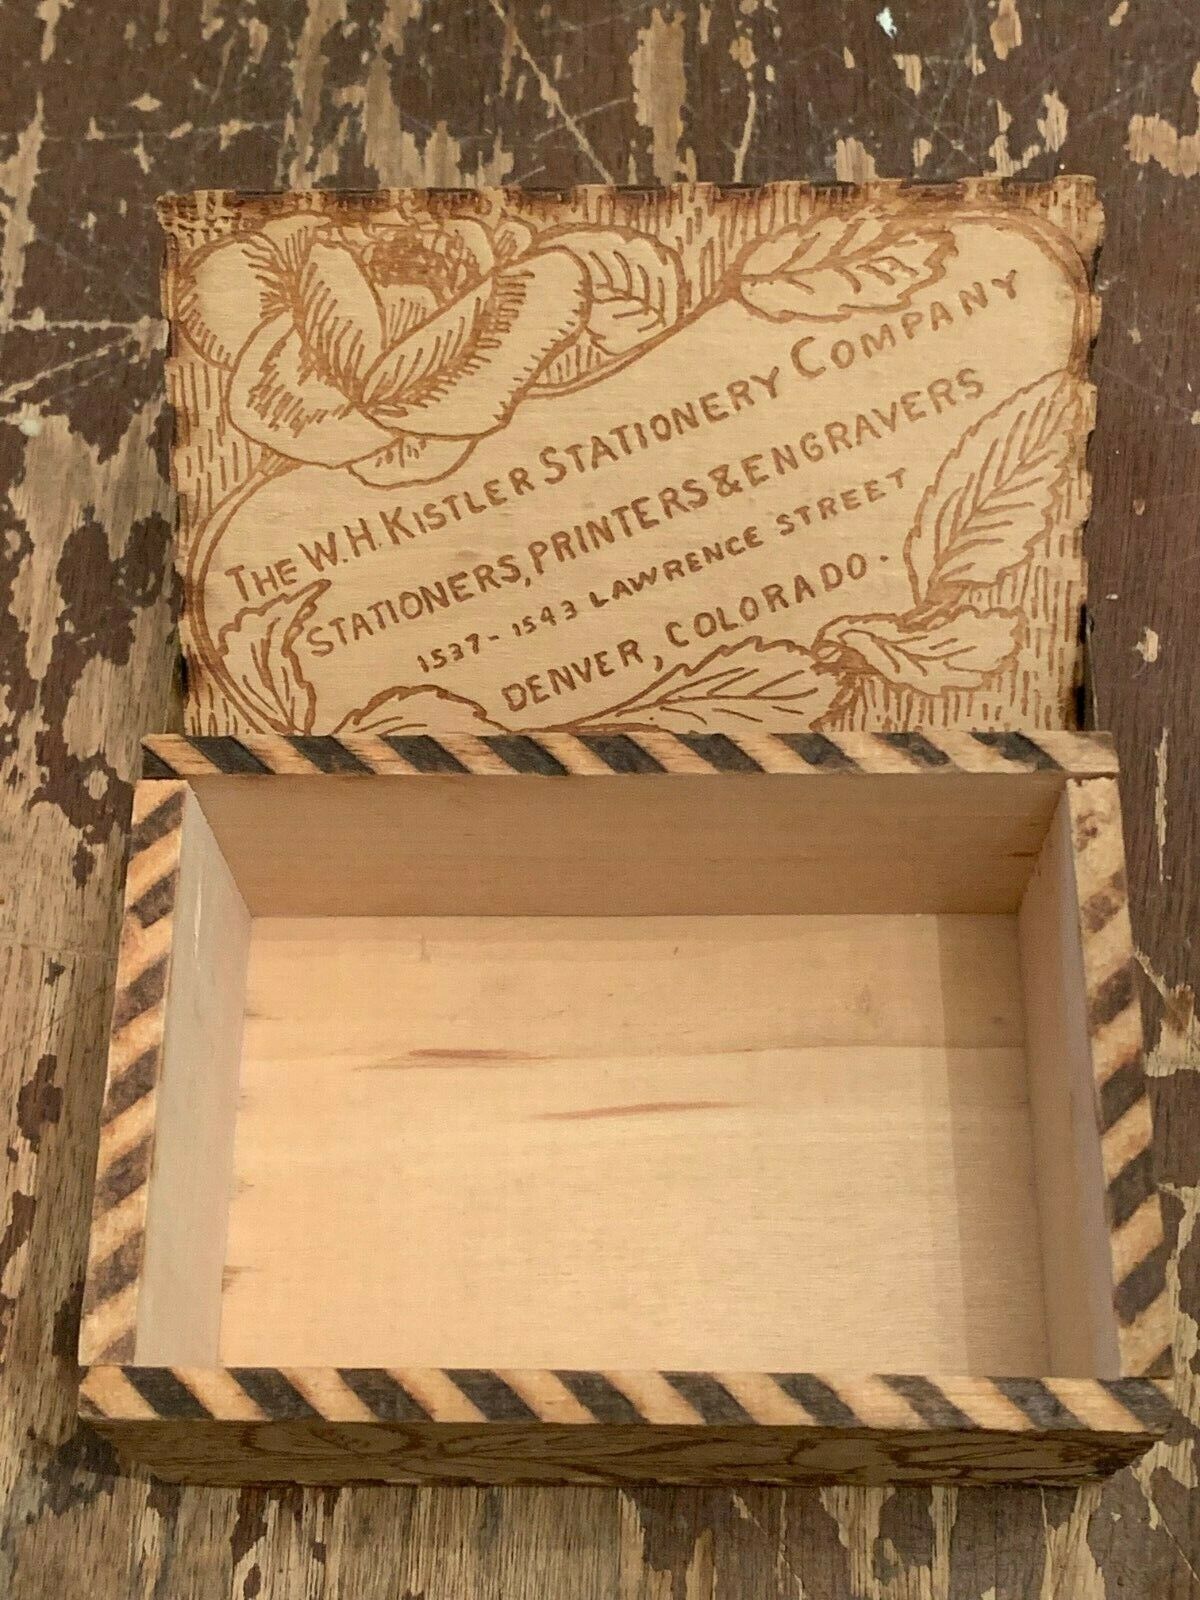 Vintage Pyro Art Wood Advertising Box WH Kistler Stationery Company Denver CO